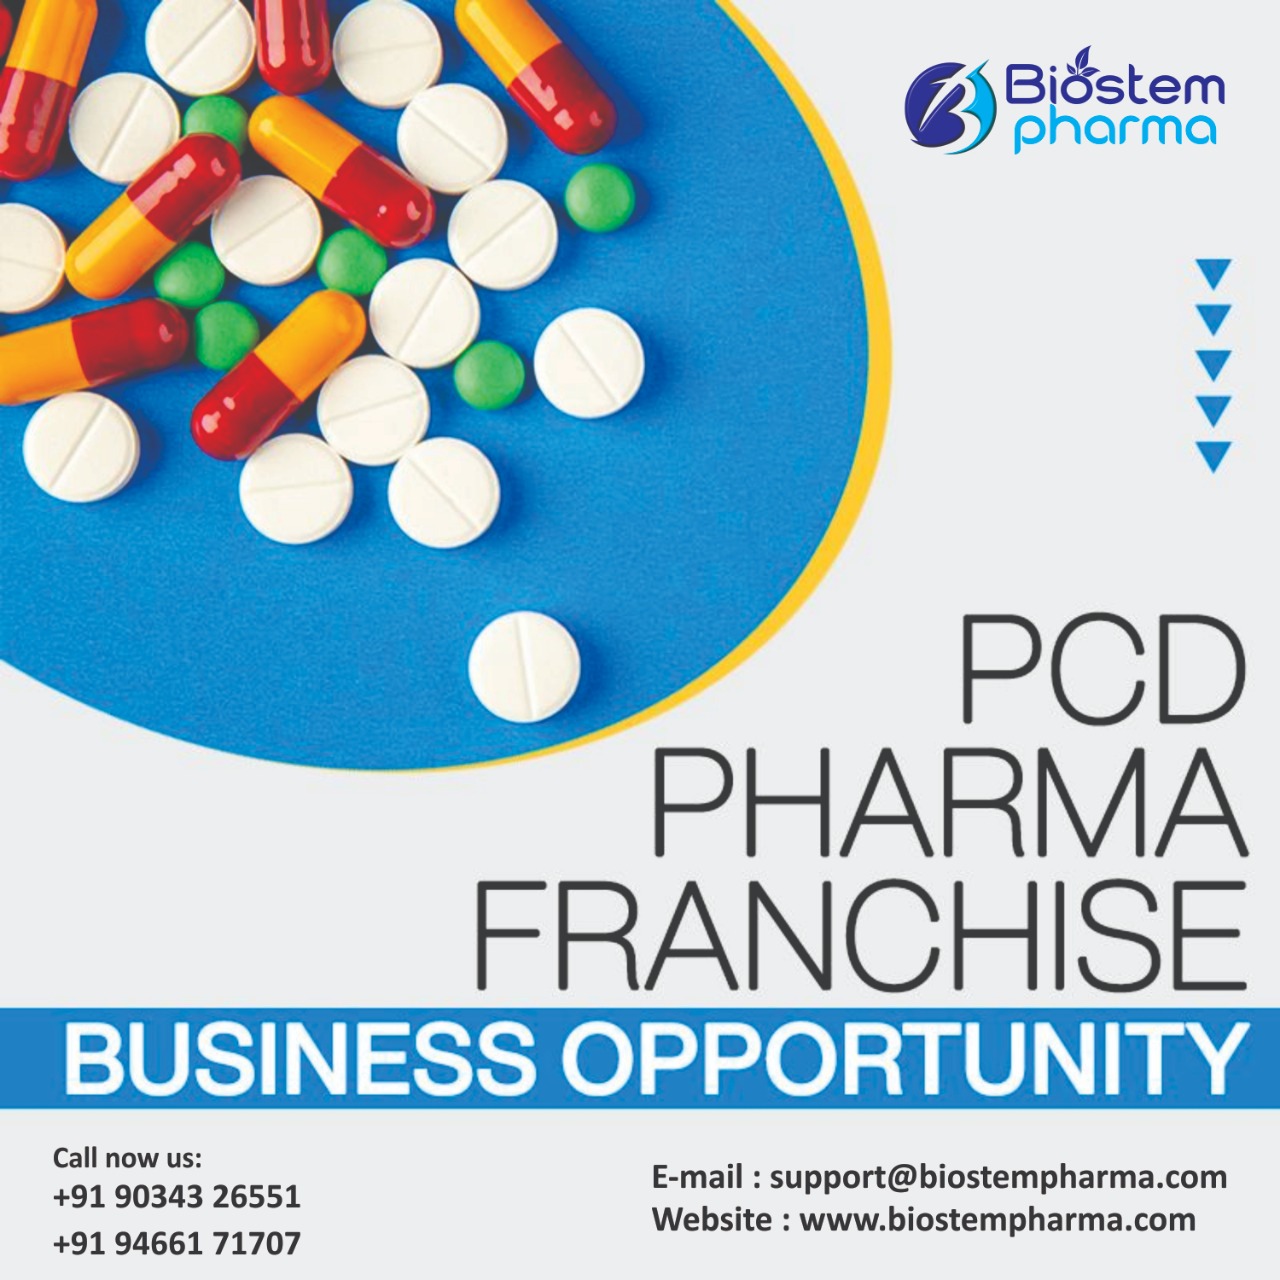 How To Become a Pharma PCD Distributor?